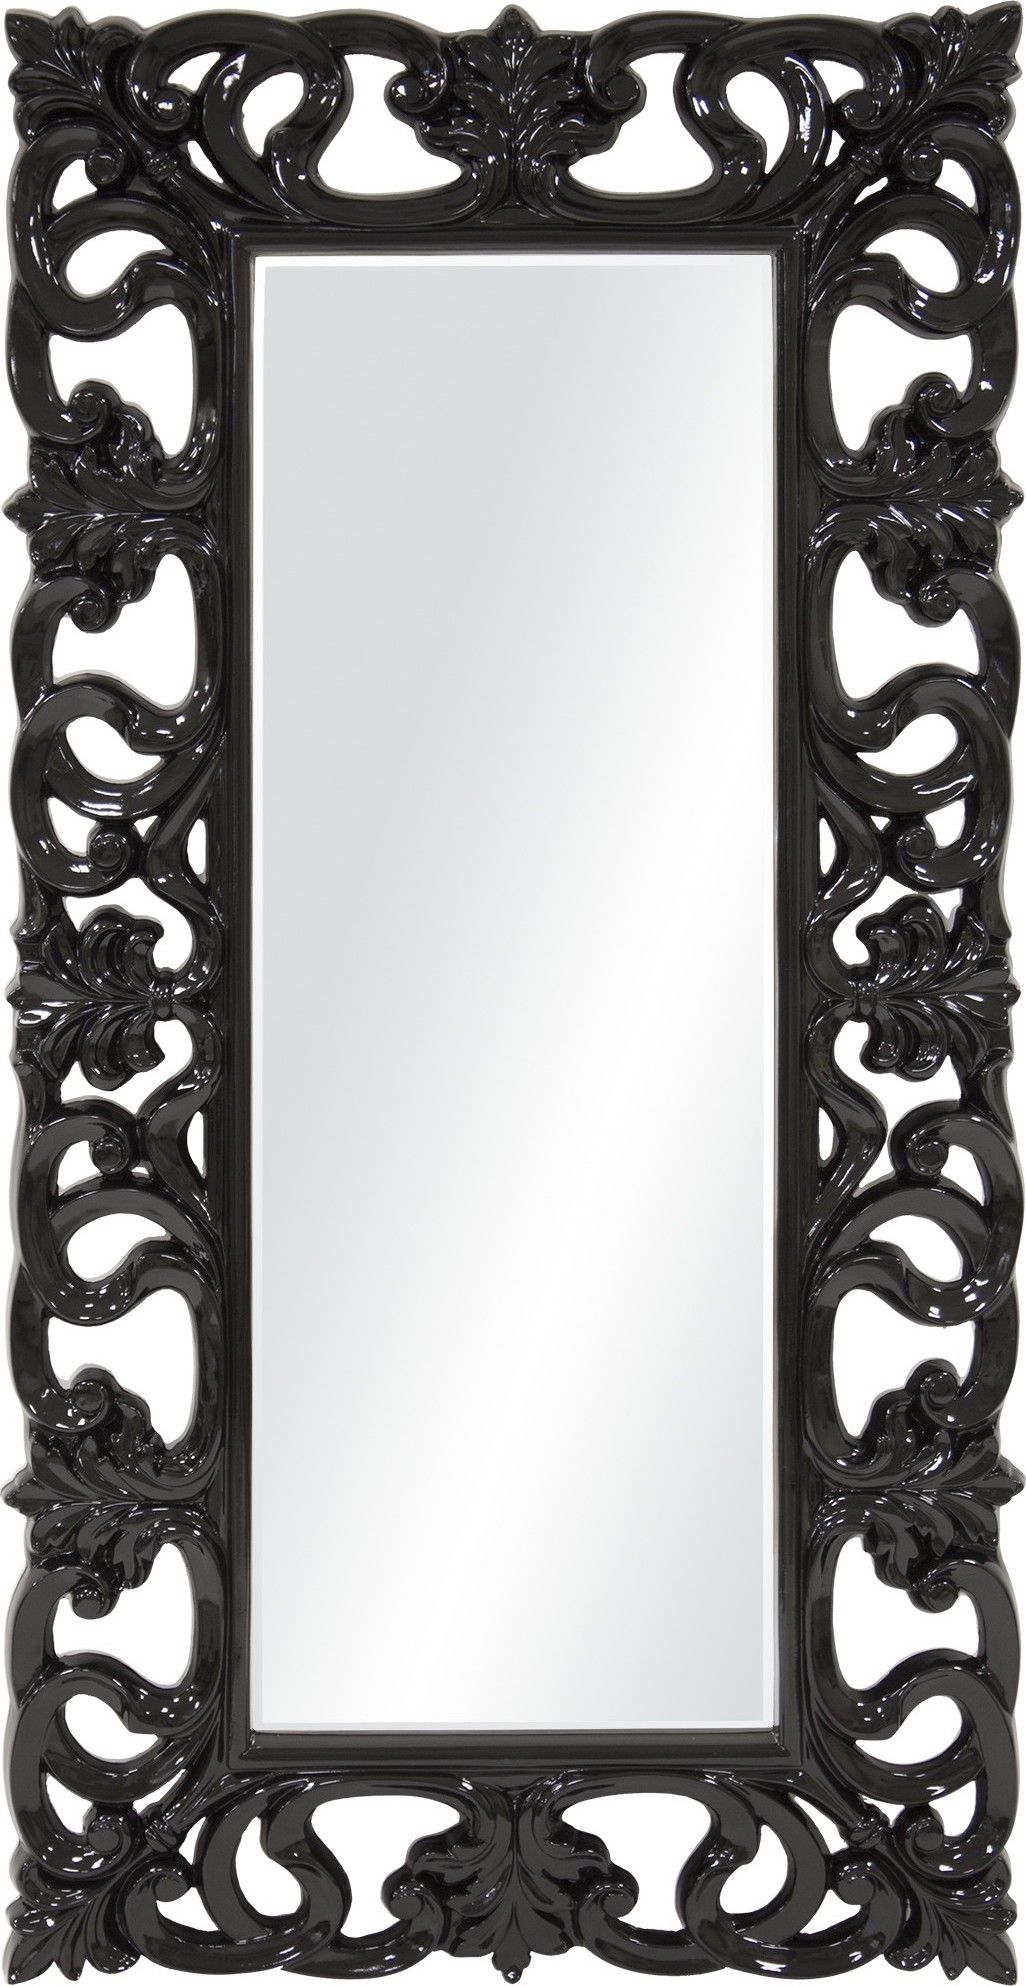 Černé zrcadlo s ornamenty 116899 Mdum - M DUM.cz